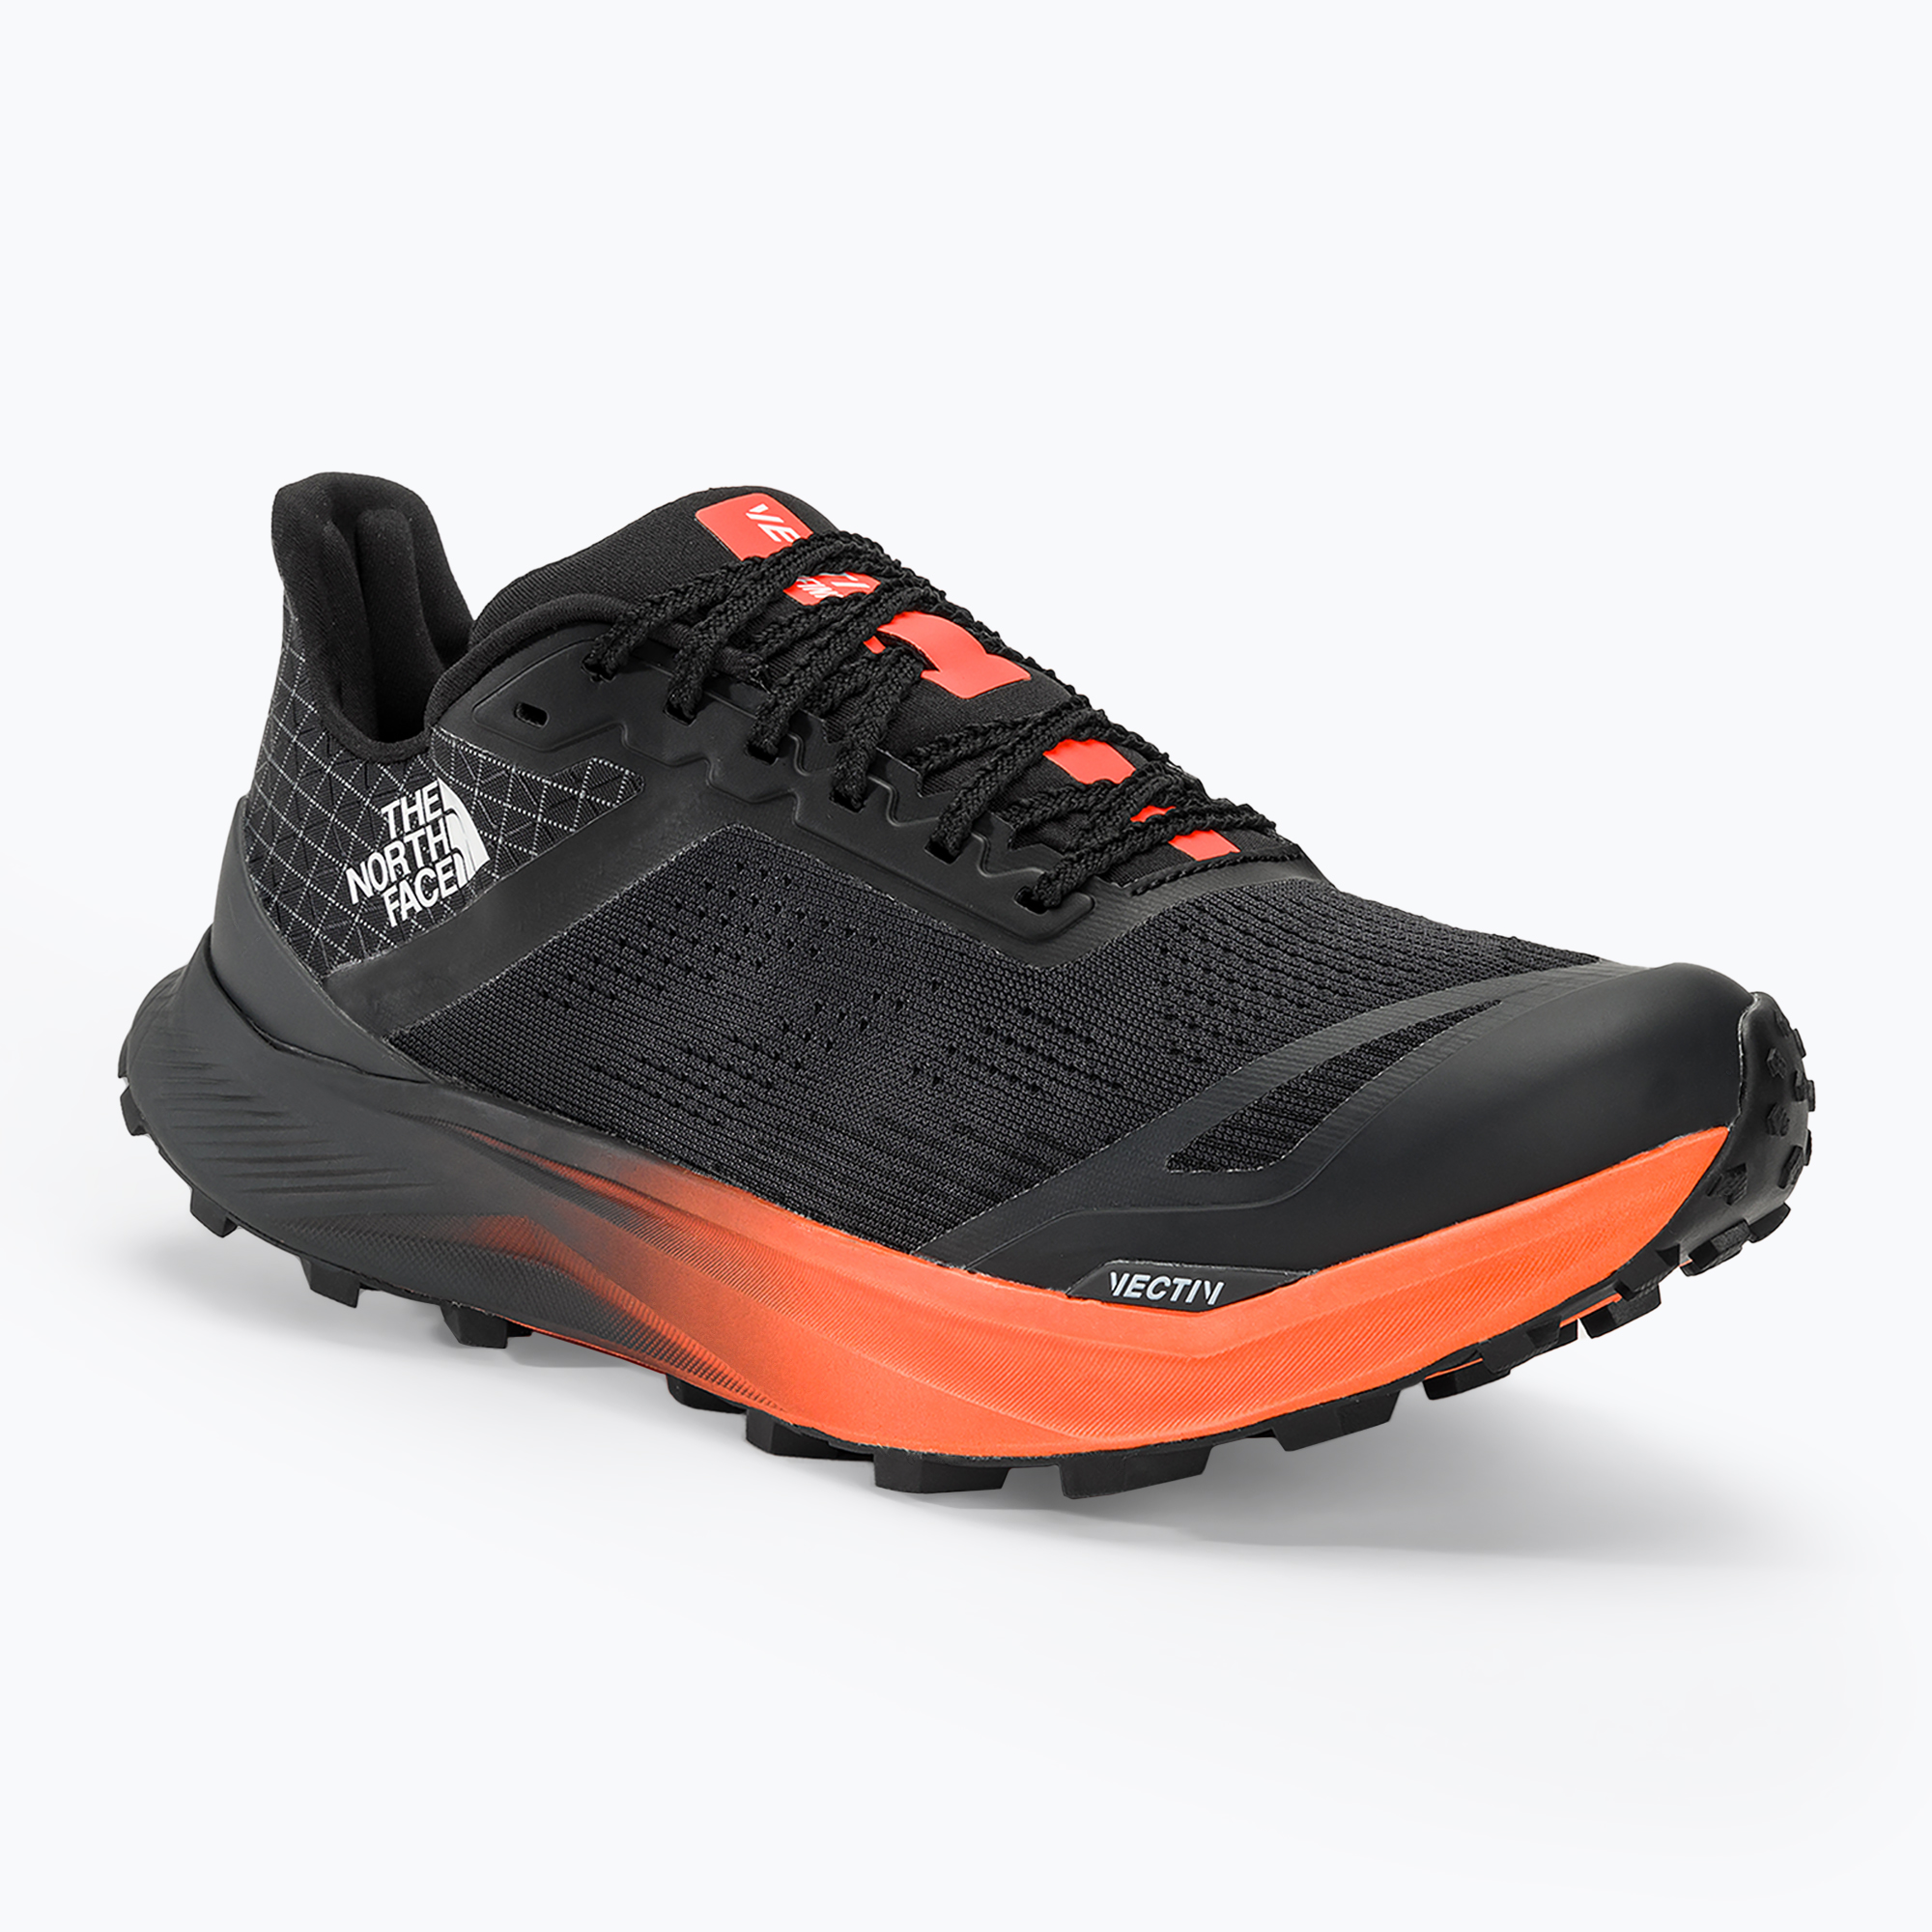 Мъжки обувки за бягане The North Face Vectiv Infinite 2 asphalt grey/vivid flam